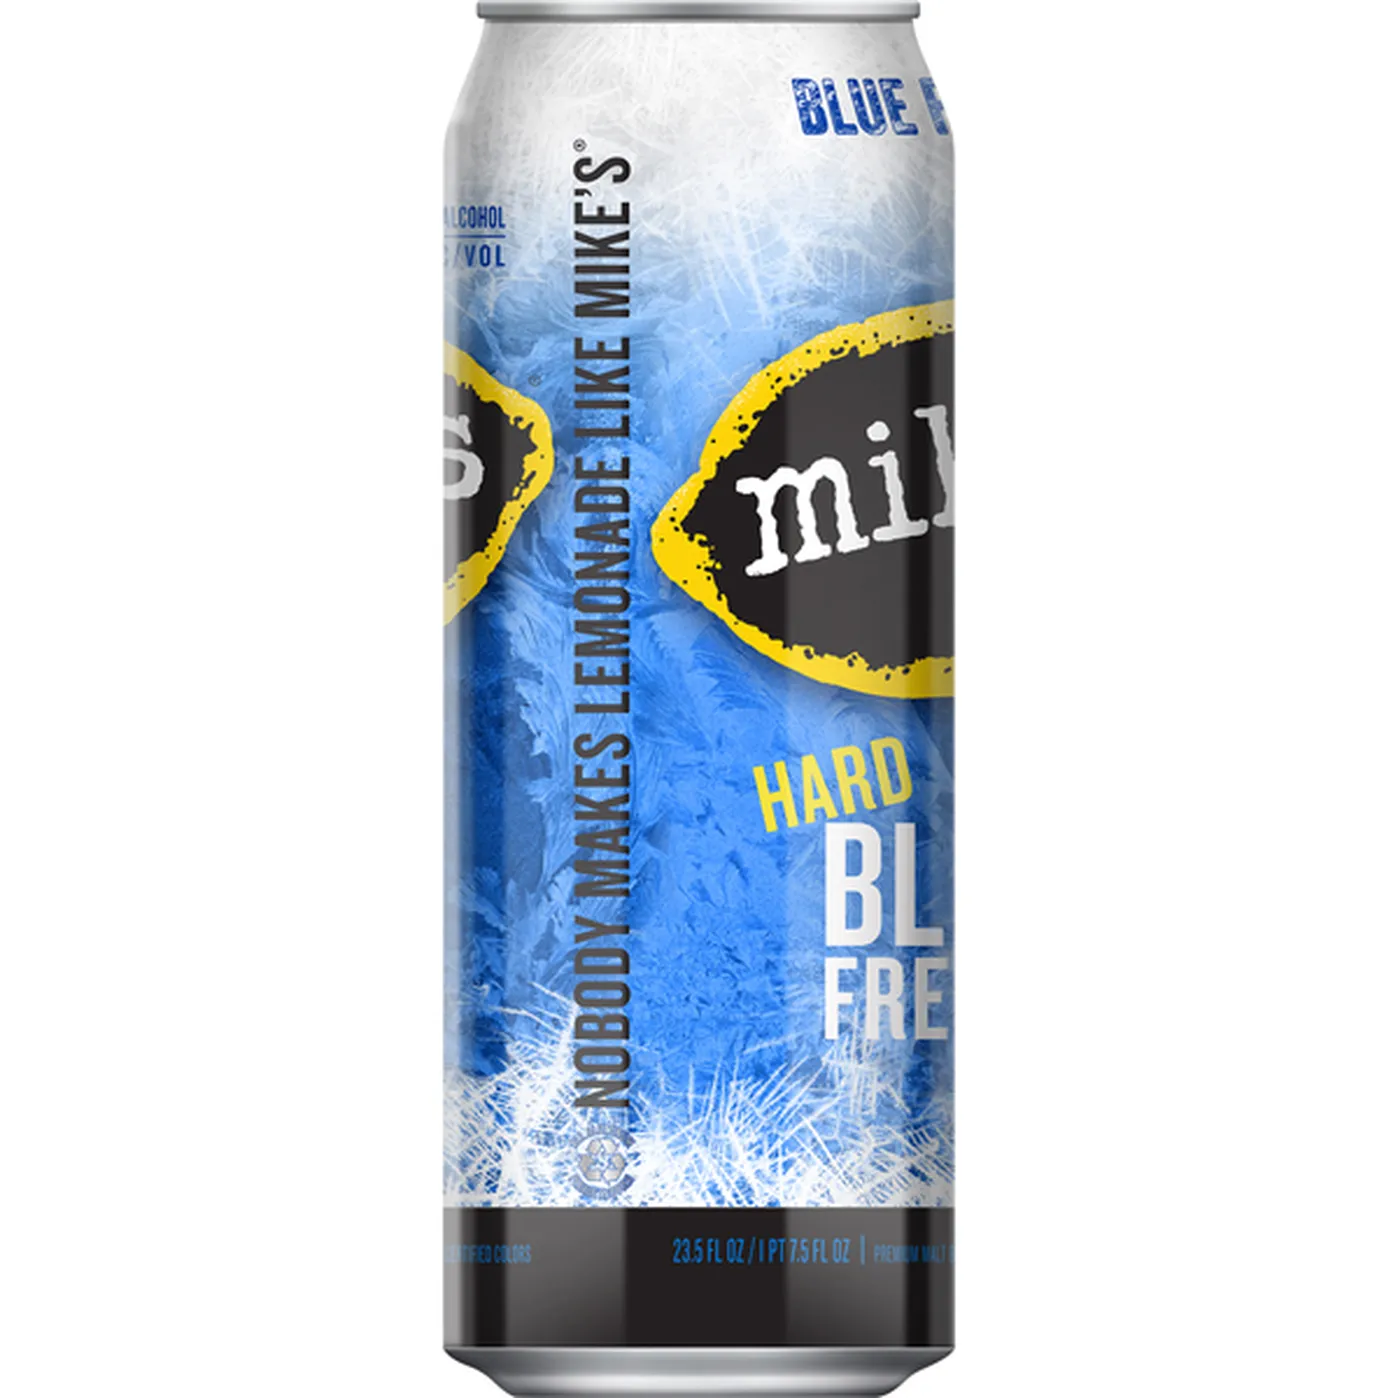 mike-s-hard-lemonade-tastes-just-like-your-favorite-melted-blue